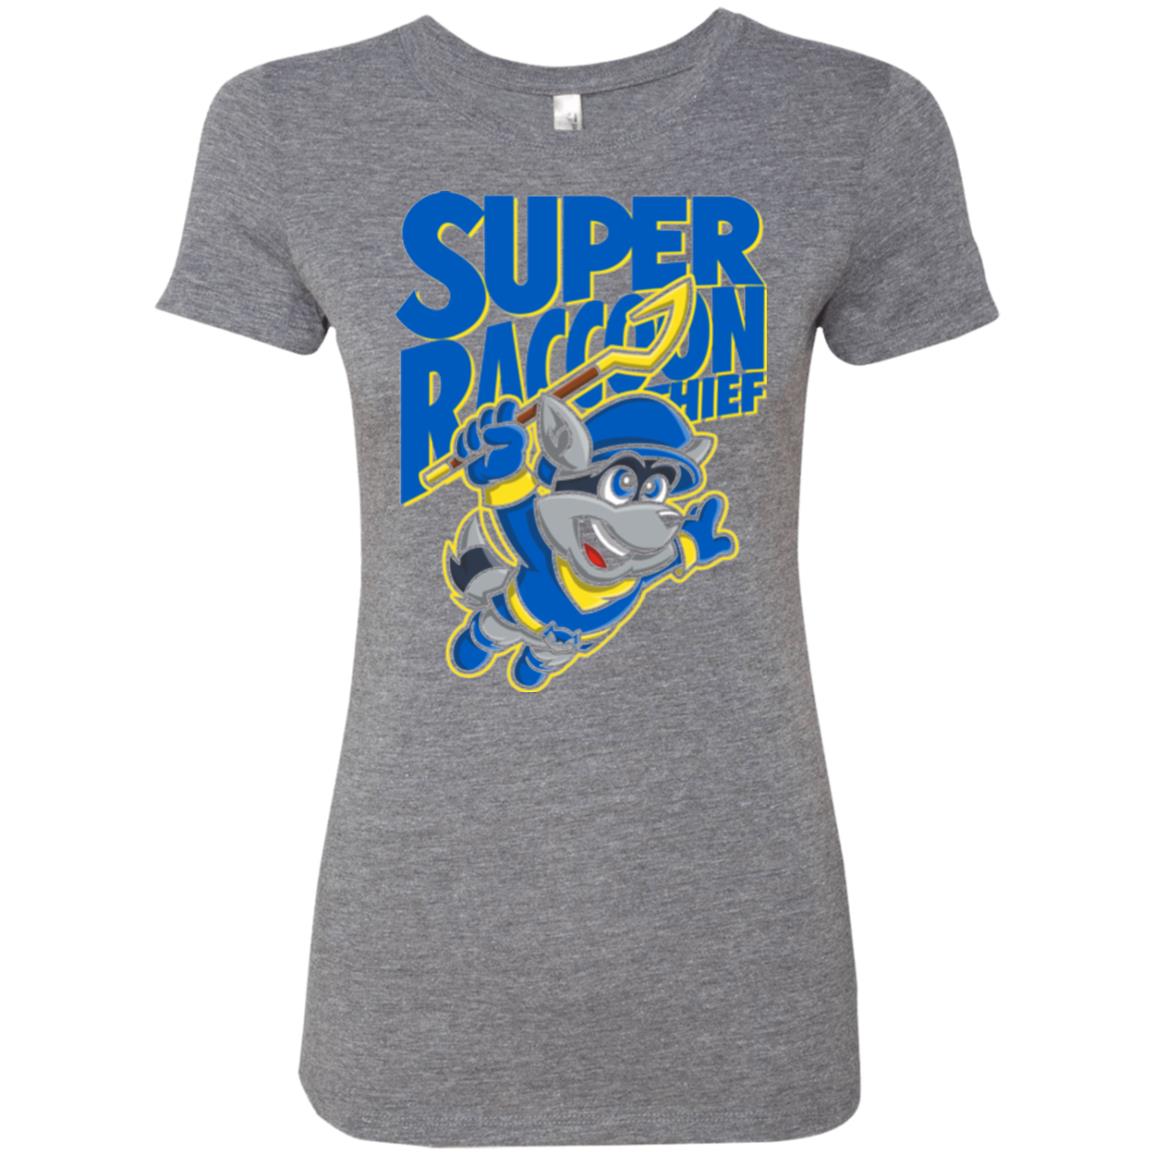 Super Racoon Thief Women's Triblend T-Shirt